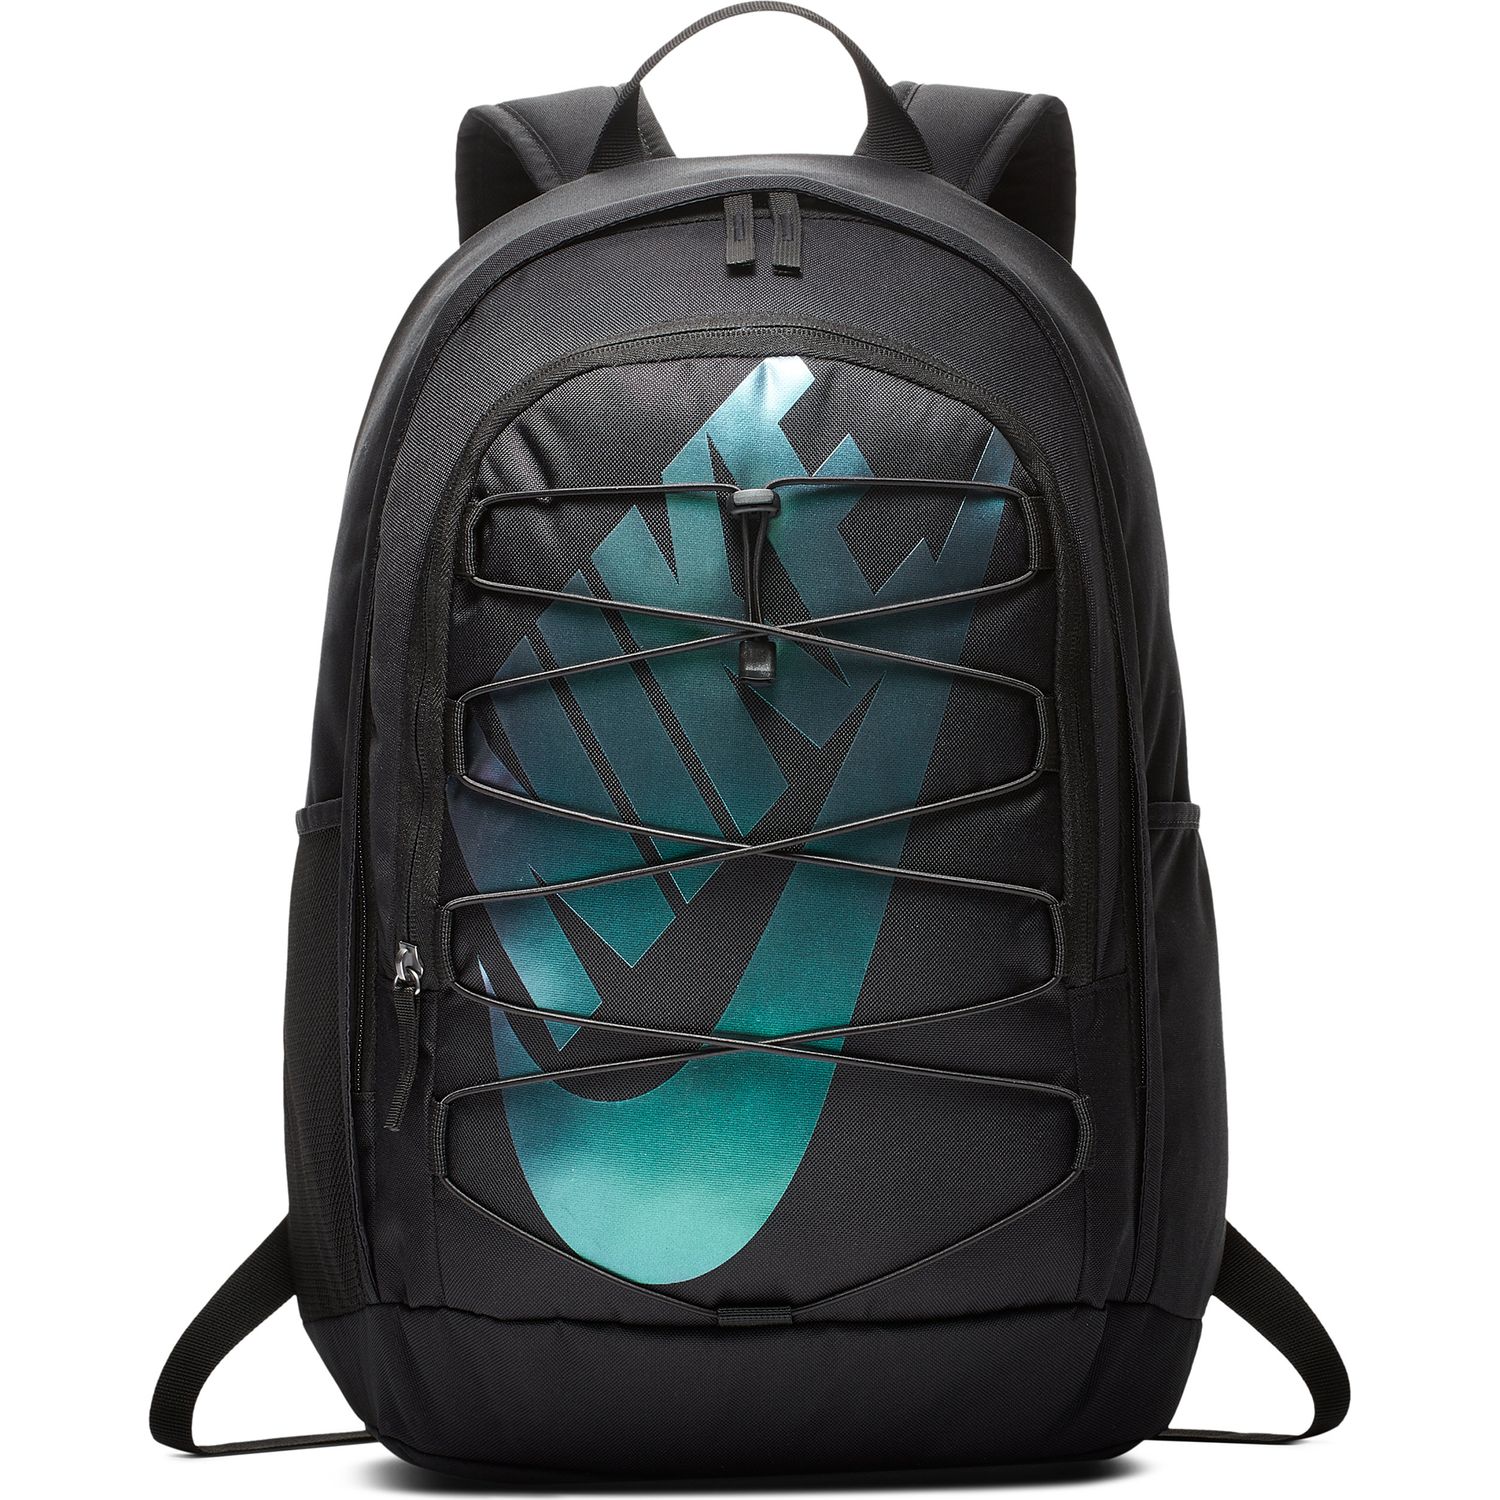 hayward 2.0 backpack nike